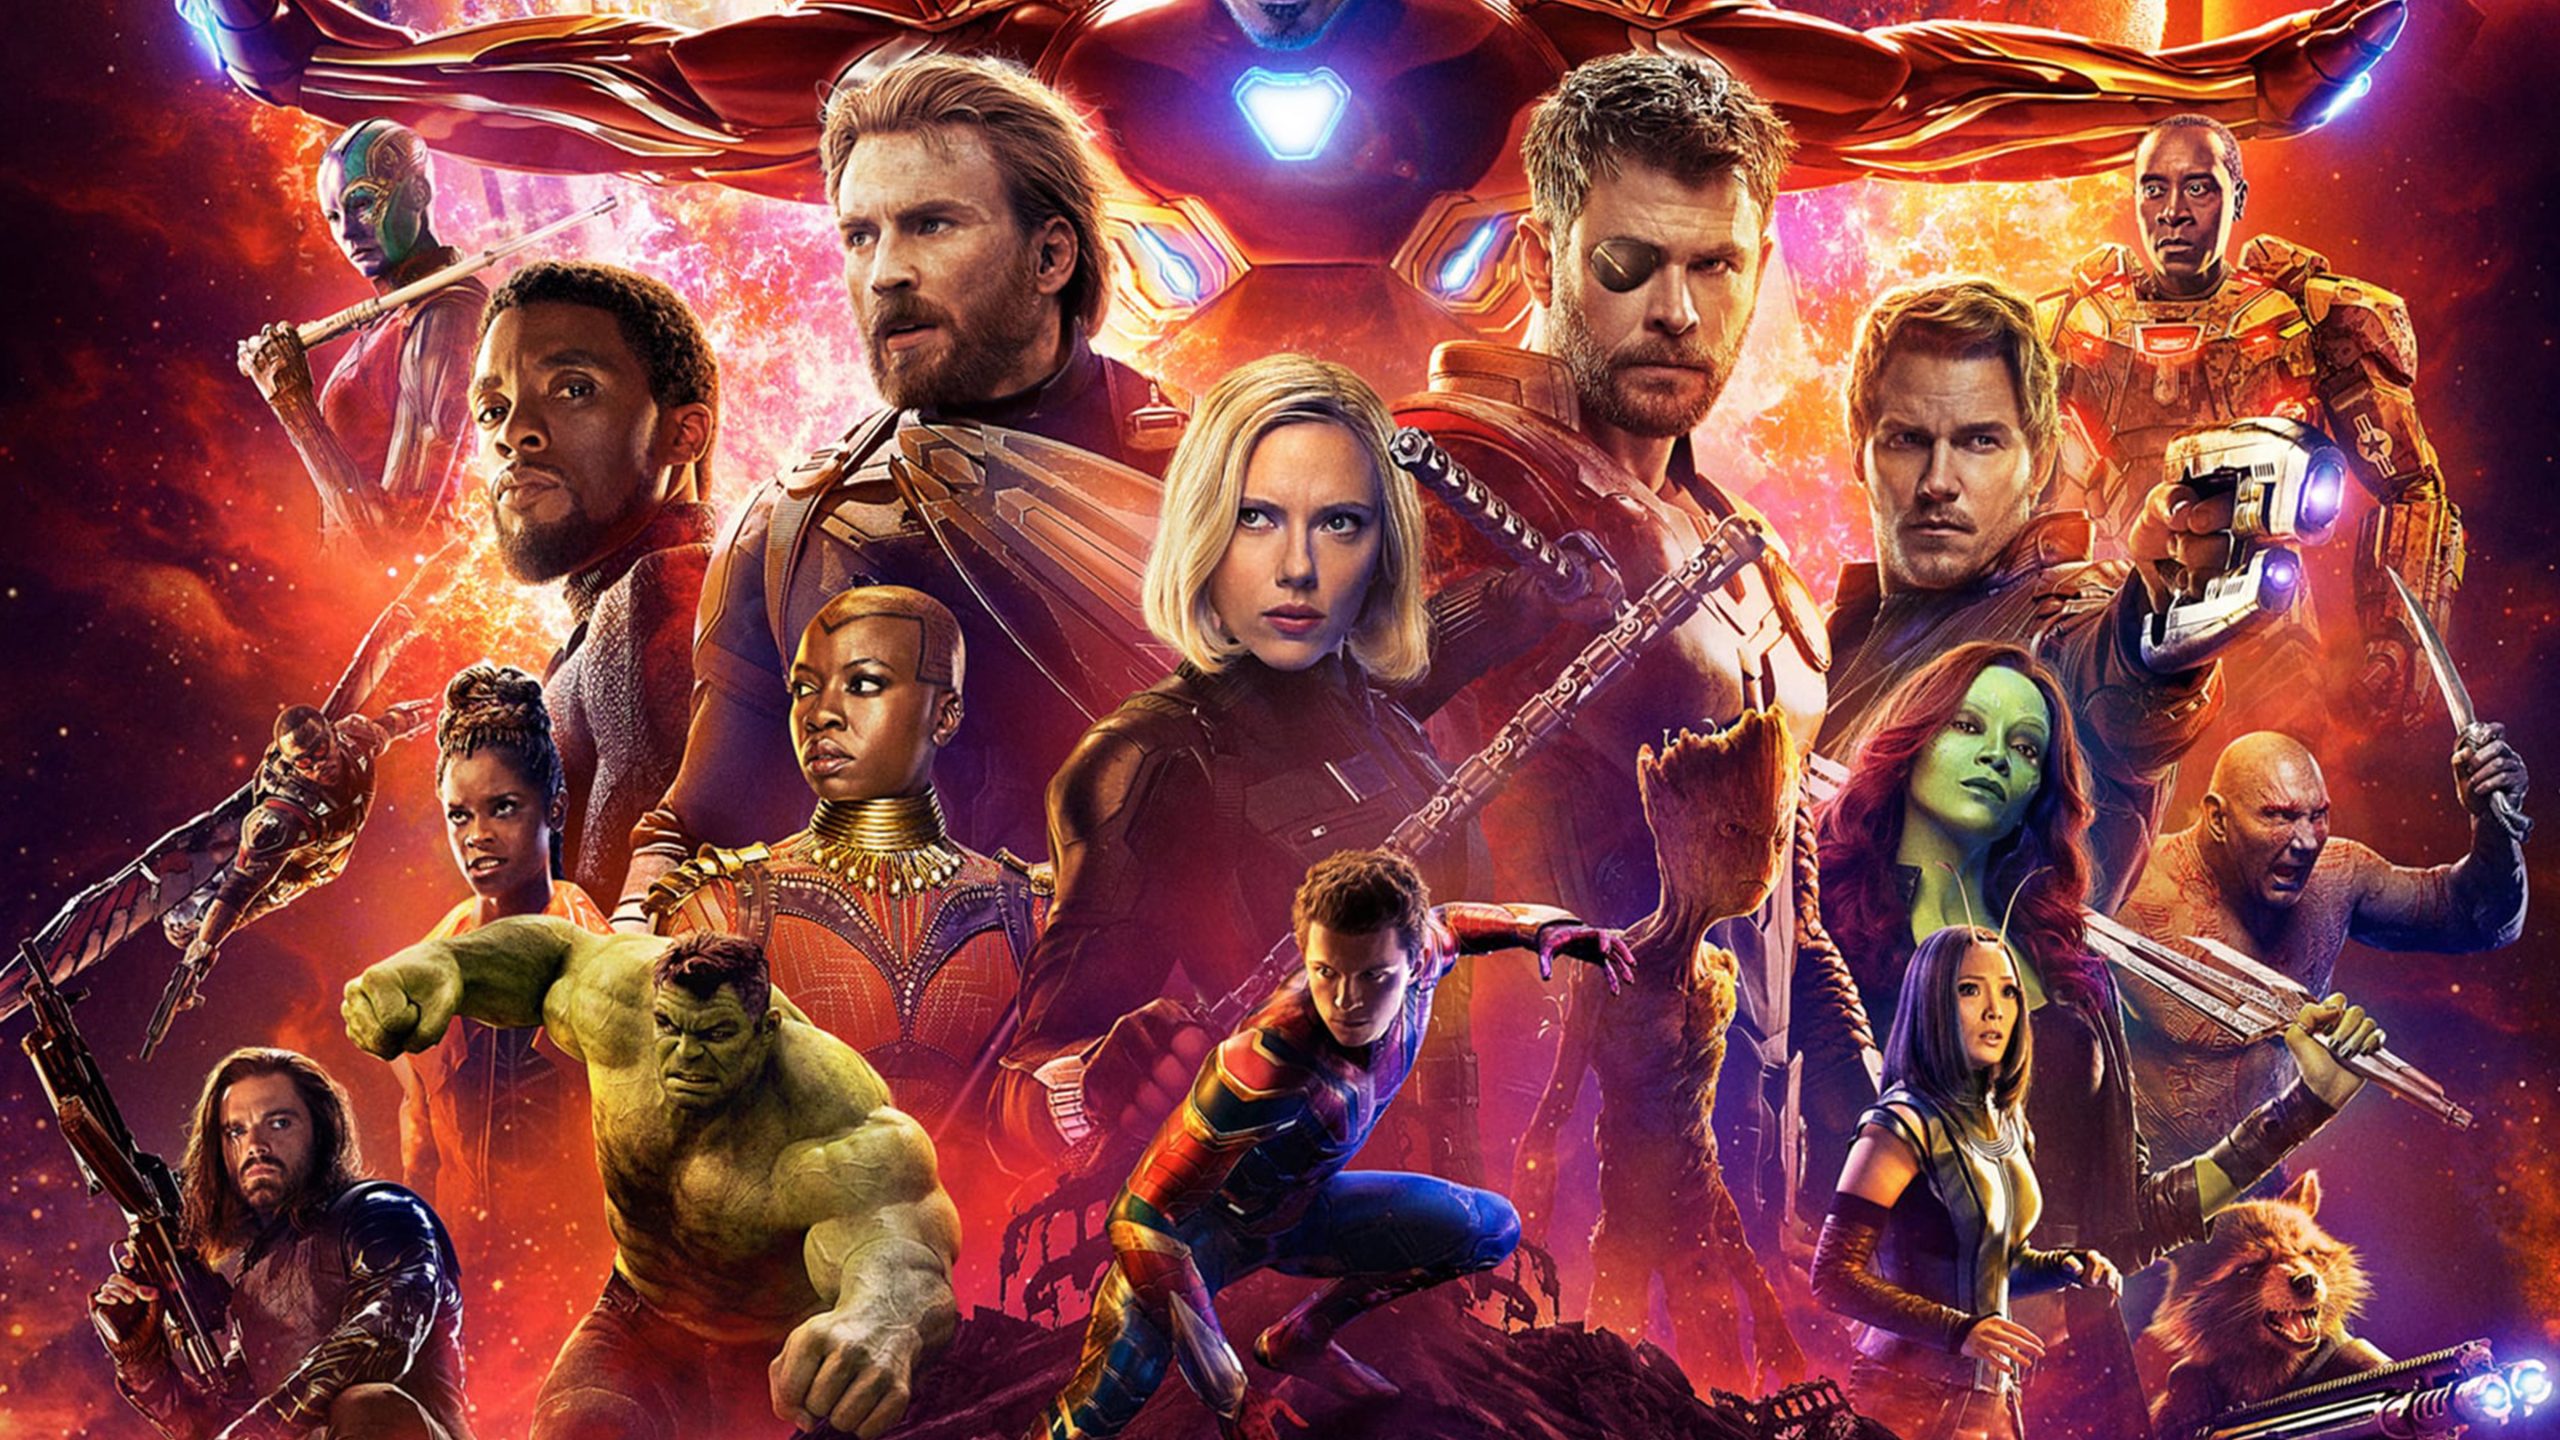 Avengers- Infinity War (2018)